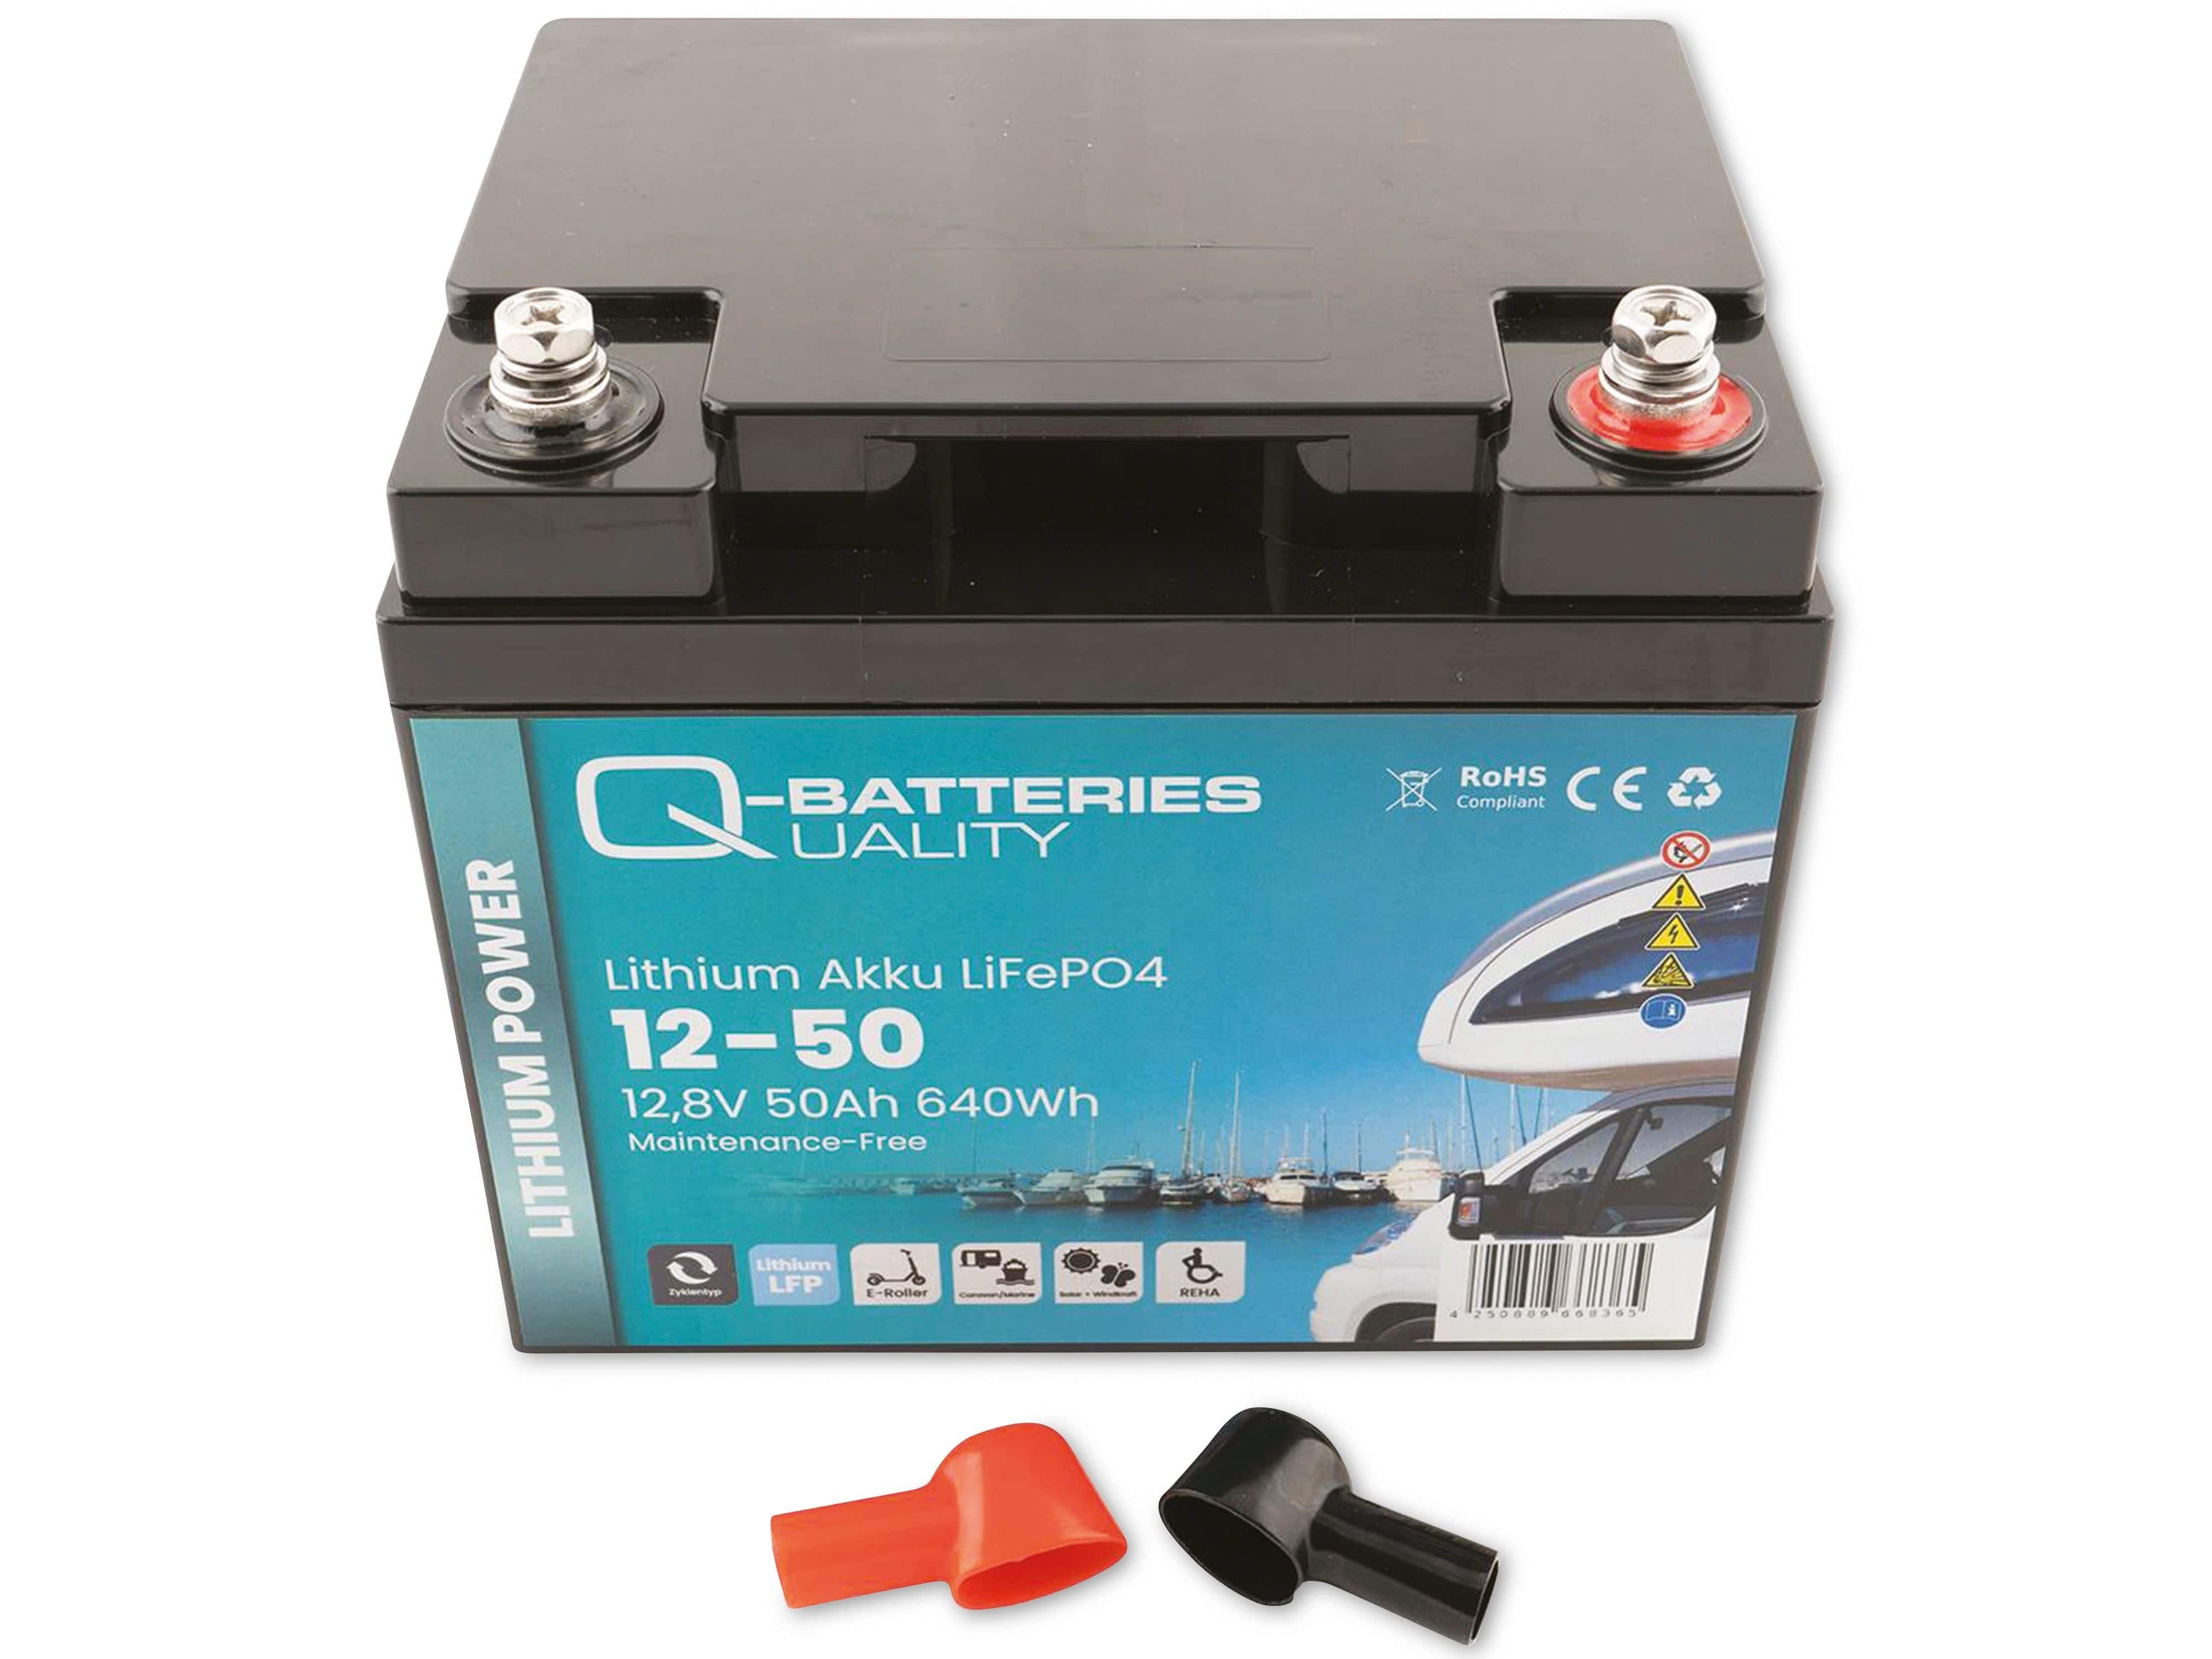 12,8V, Q-Batteries 50Ah 12-50 Batterie 640Wh Akku Lithium Q-BATTERIES